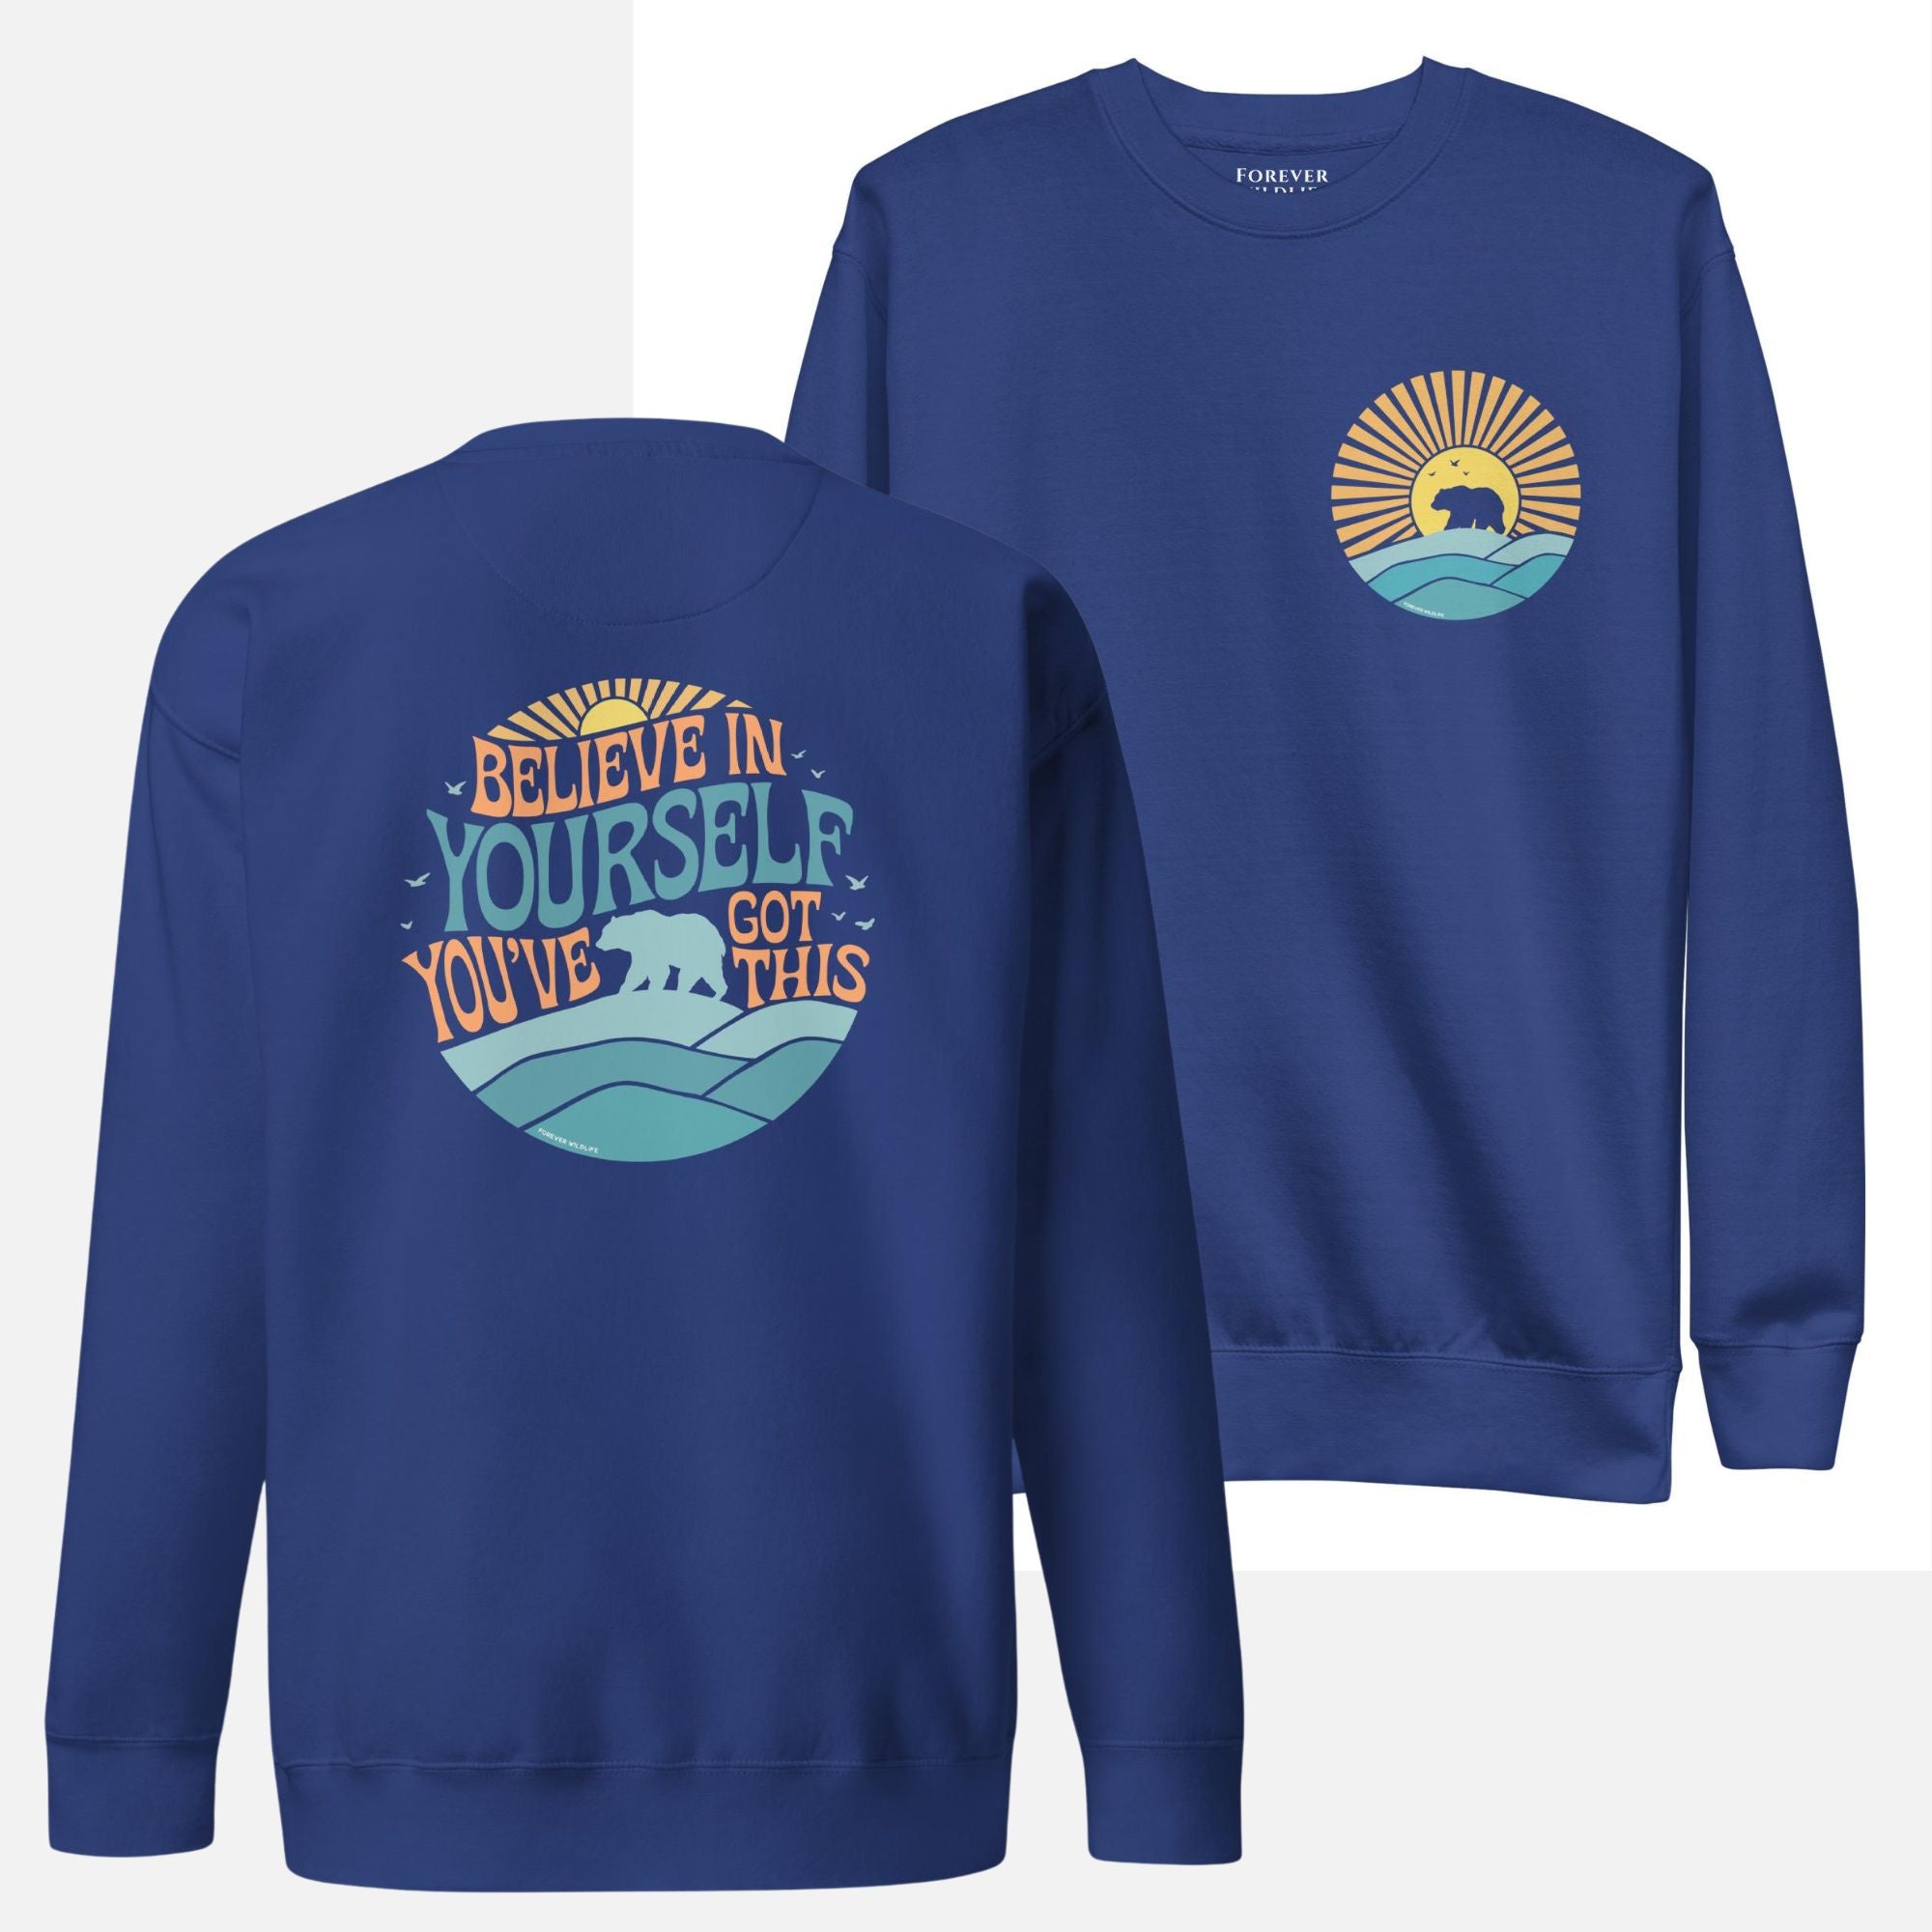 Polar Bear Sweatshirt in Team Royal, Premium Wildlife Animal Inspirational Sweatshirt Design, part of Wildlife Sweatshirts & Clothing from Forever Wildlife.